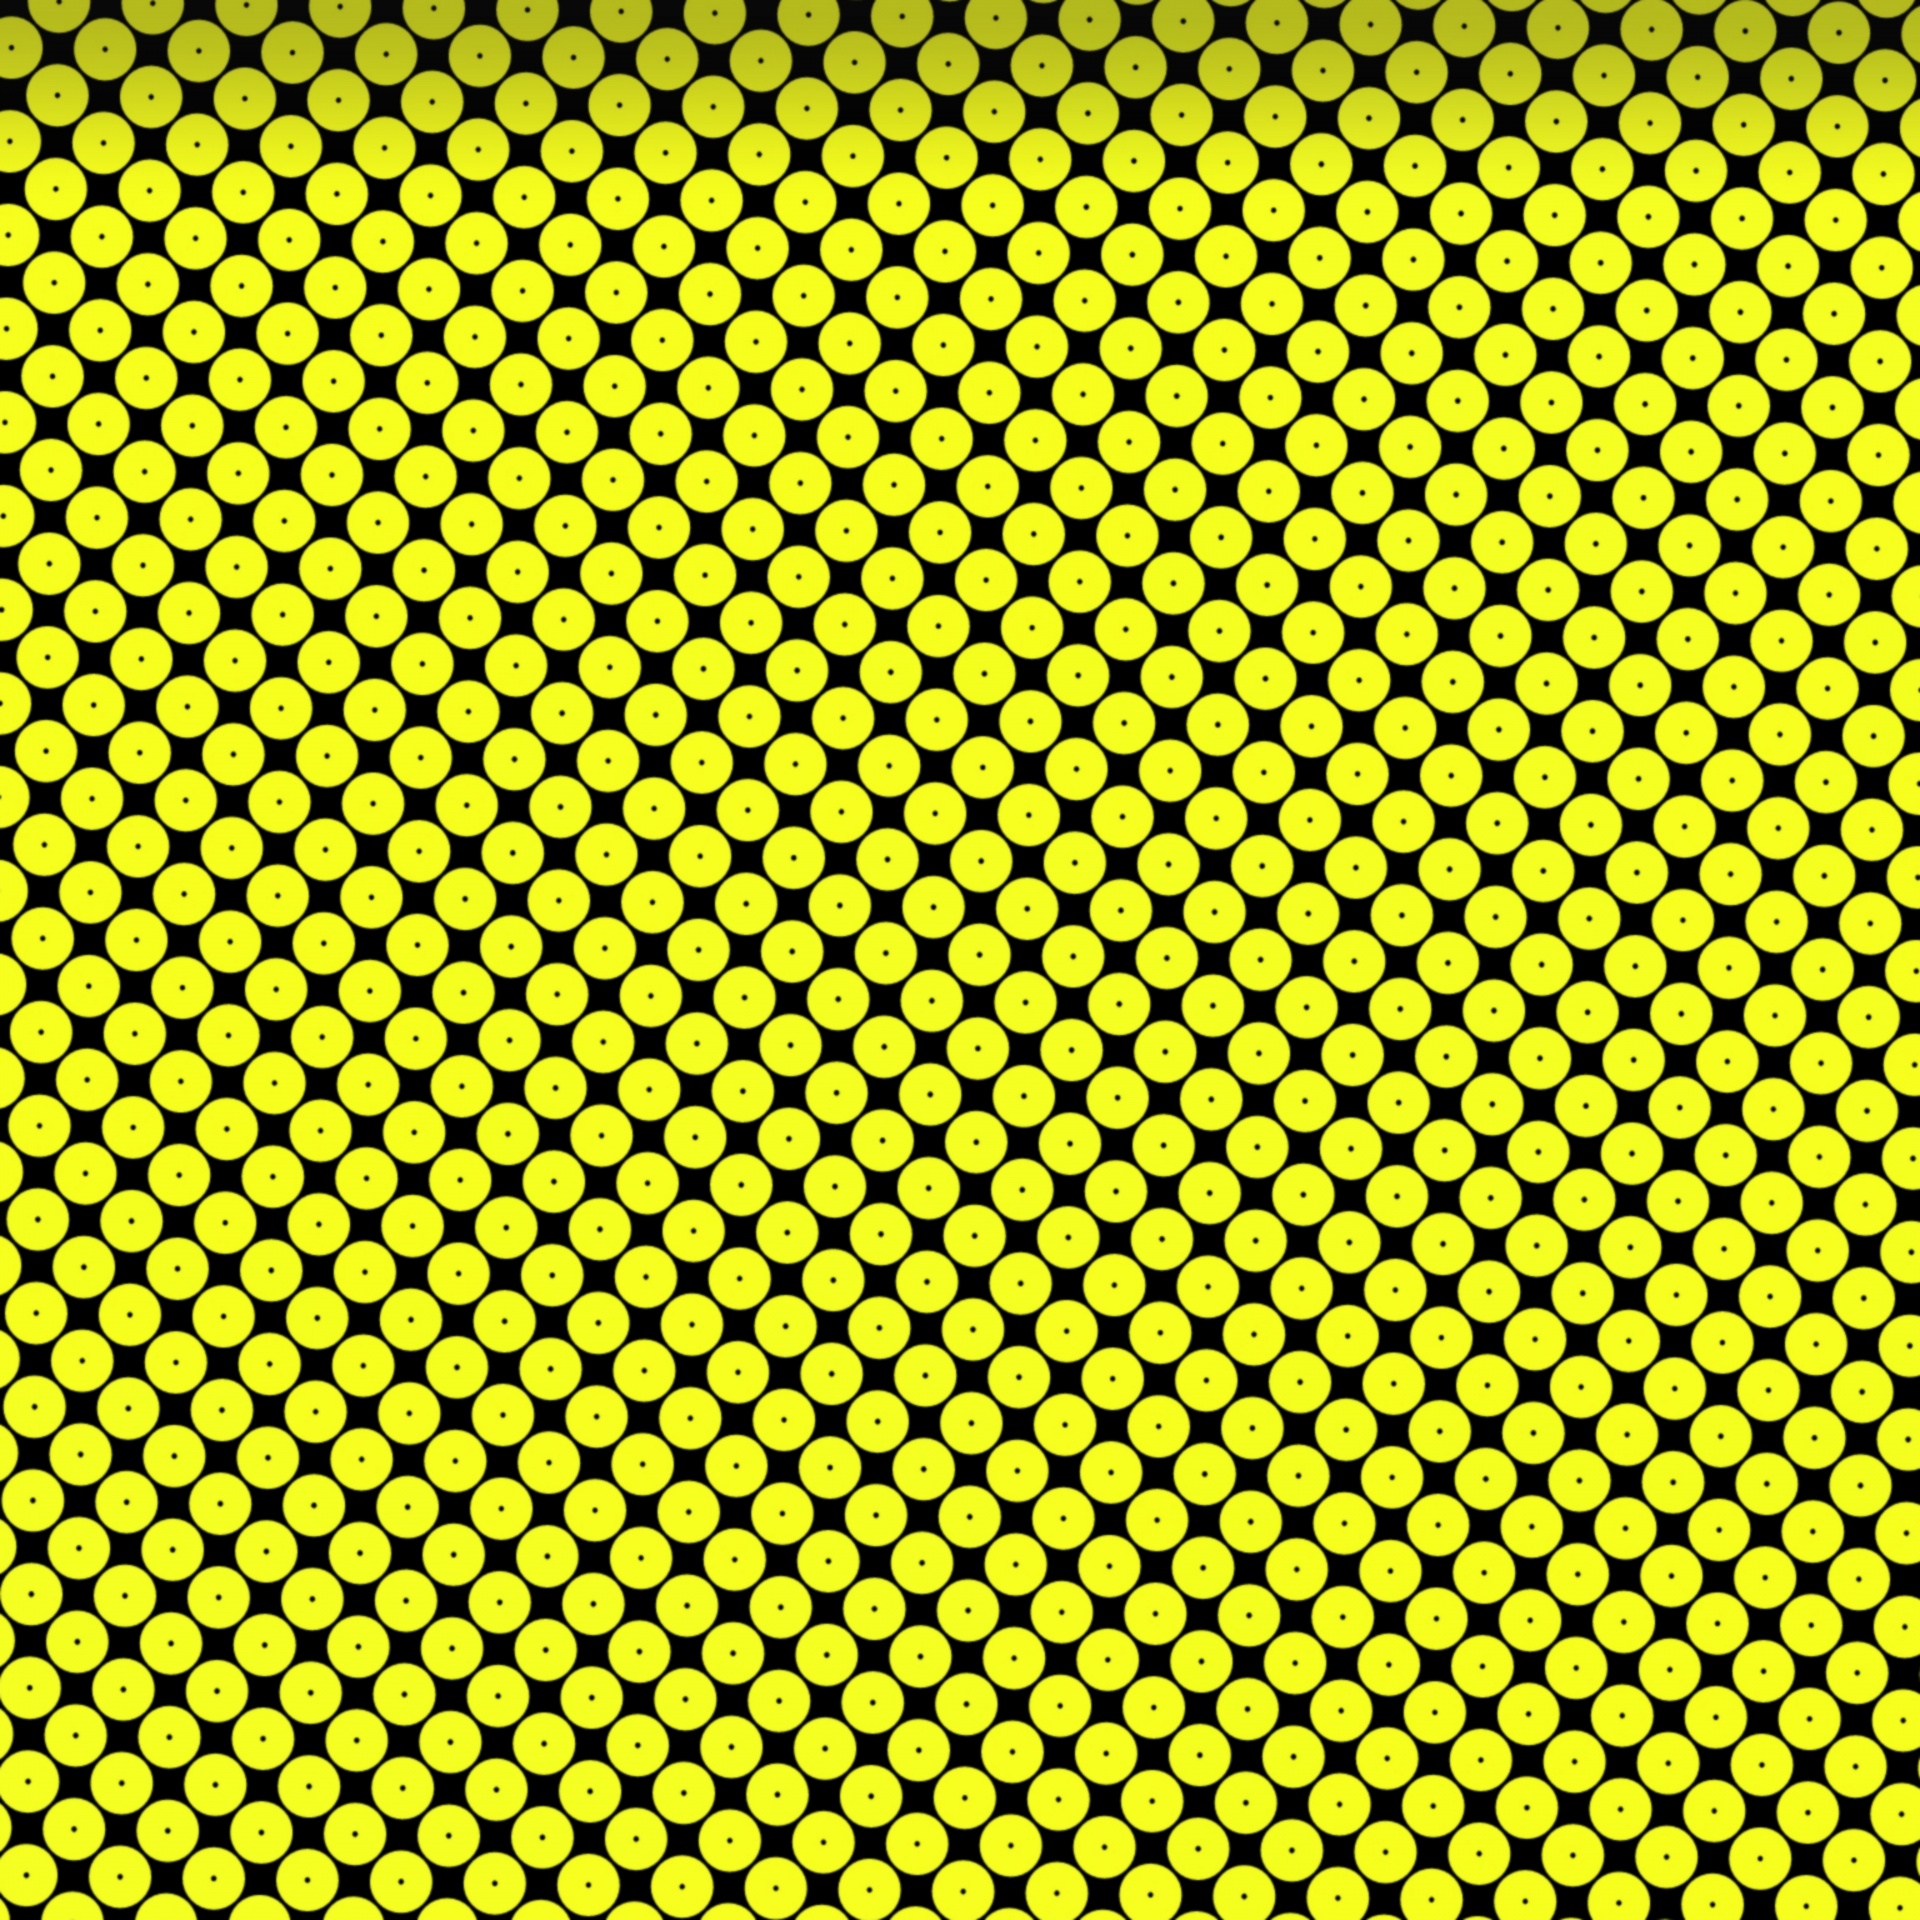 wallpaper yellow dots free photo